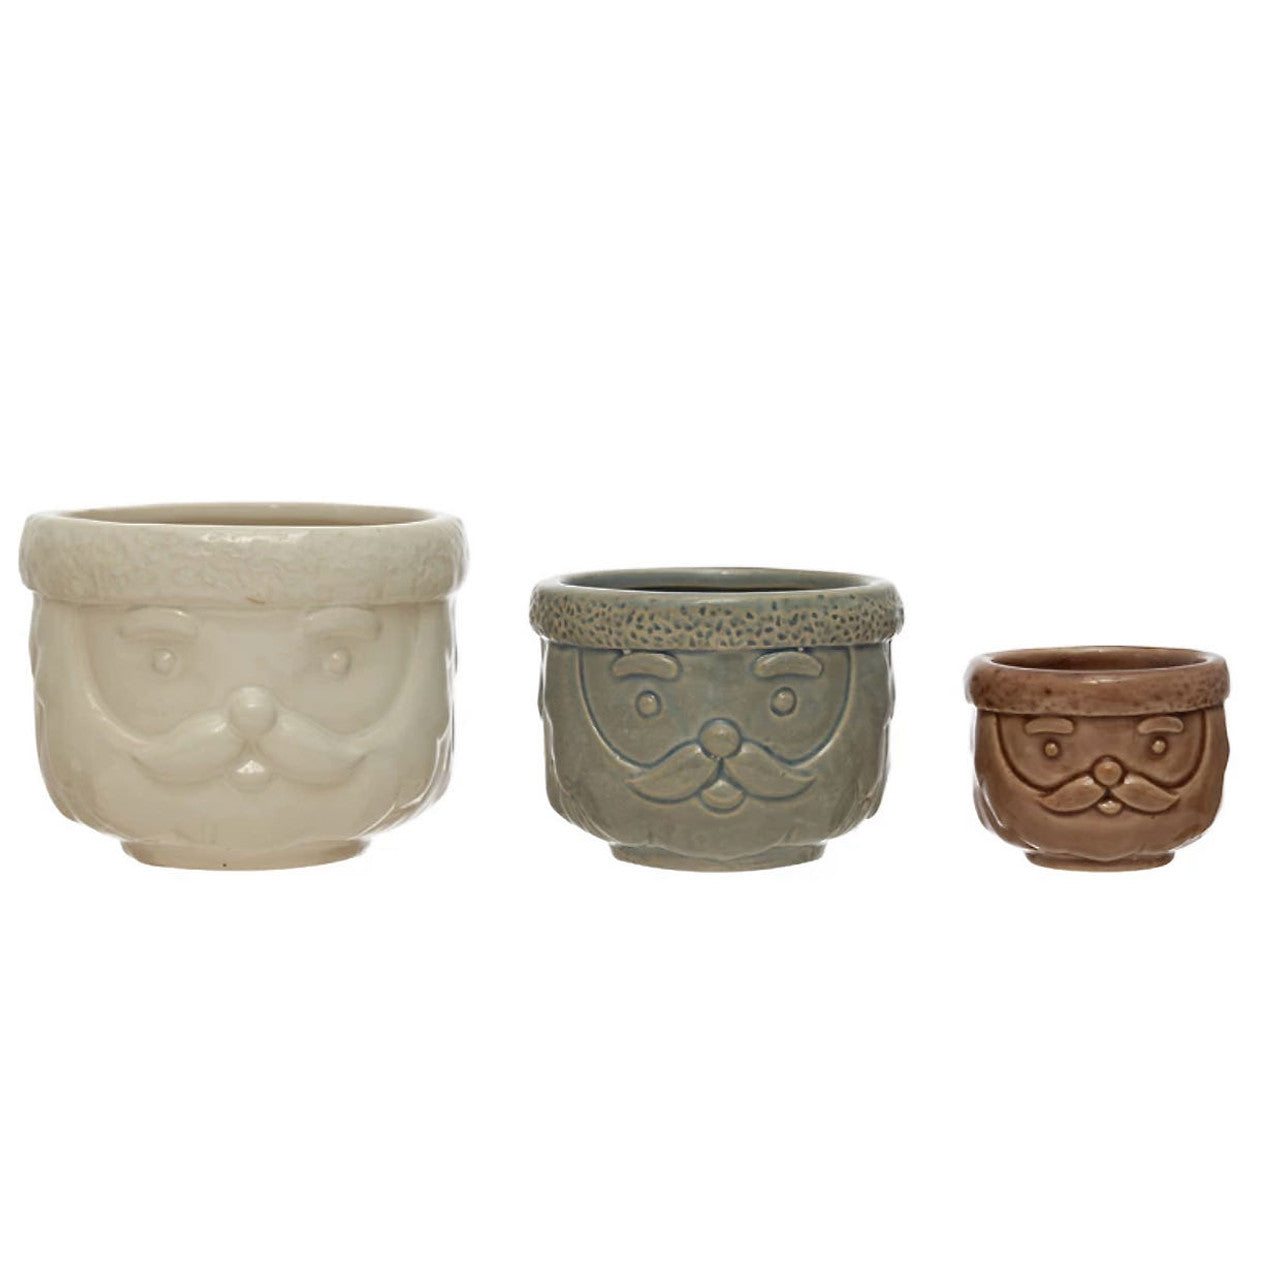 Decorative Stoneware Santa Containers - Set of 3